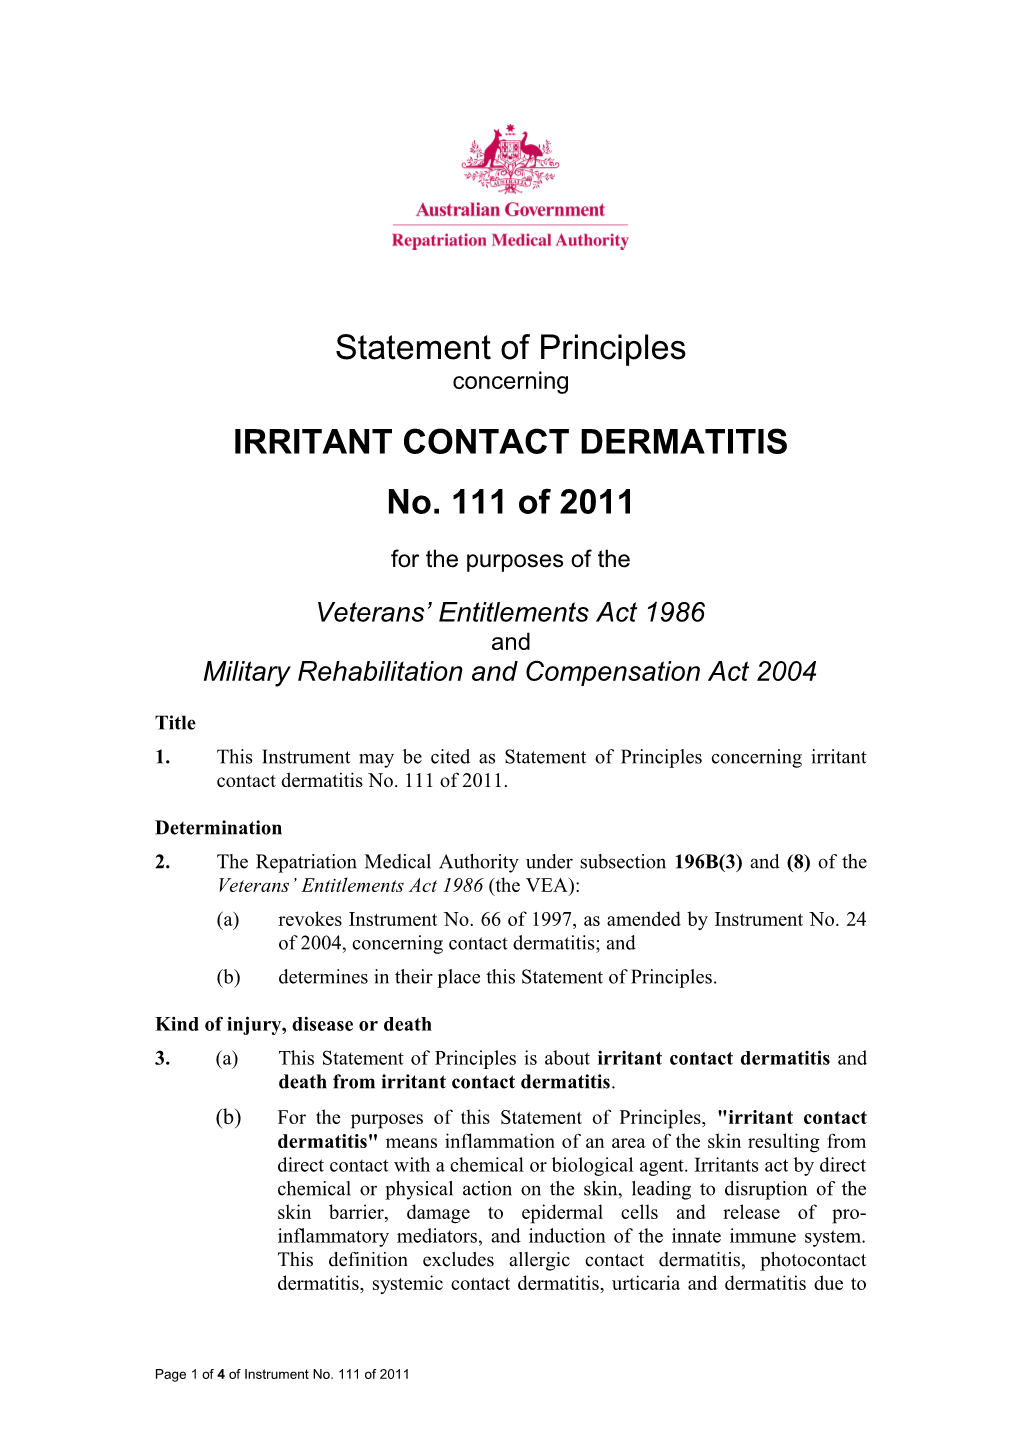 Statement of Principles 111 of 2011 Irritant Contact Dermatitis Balance of Probabilities